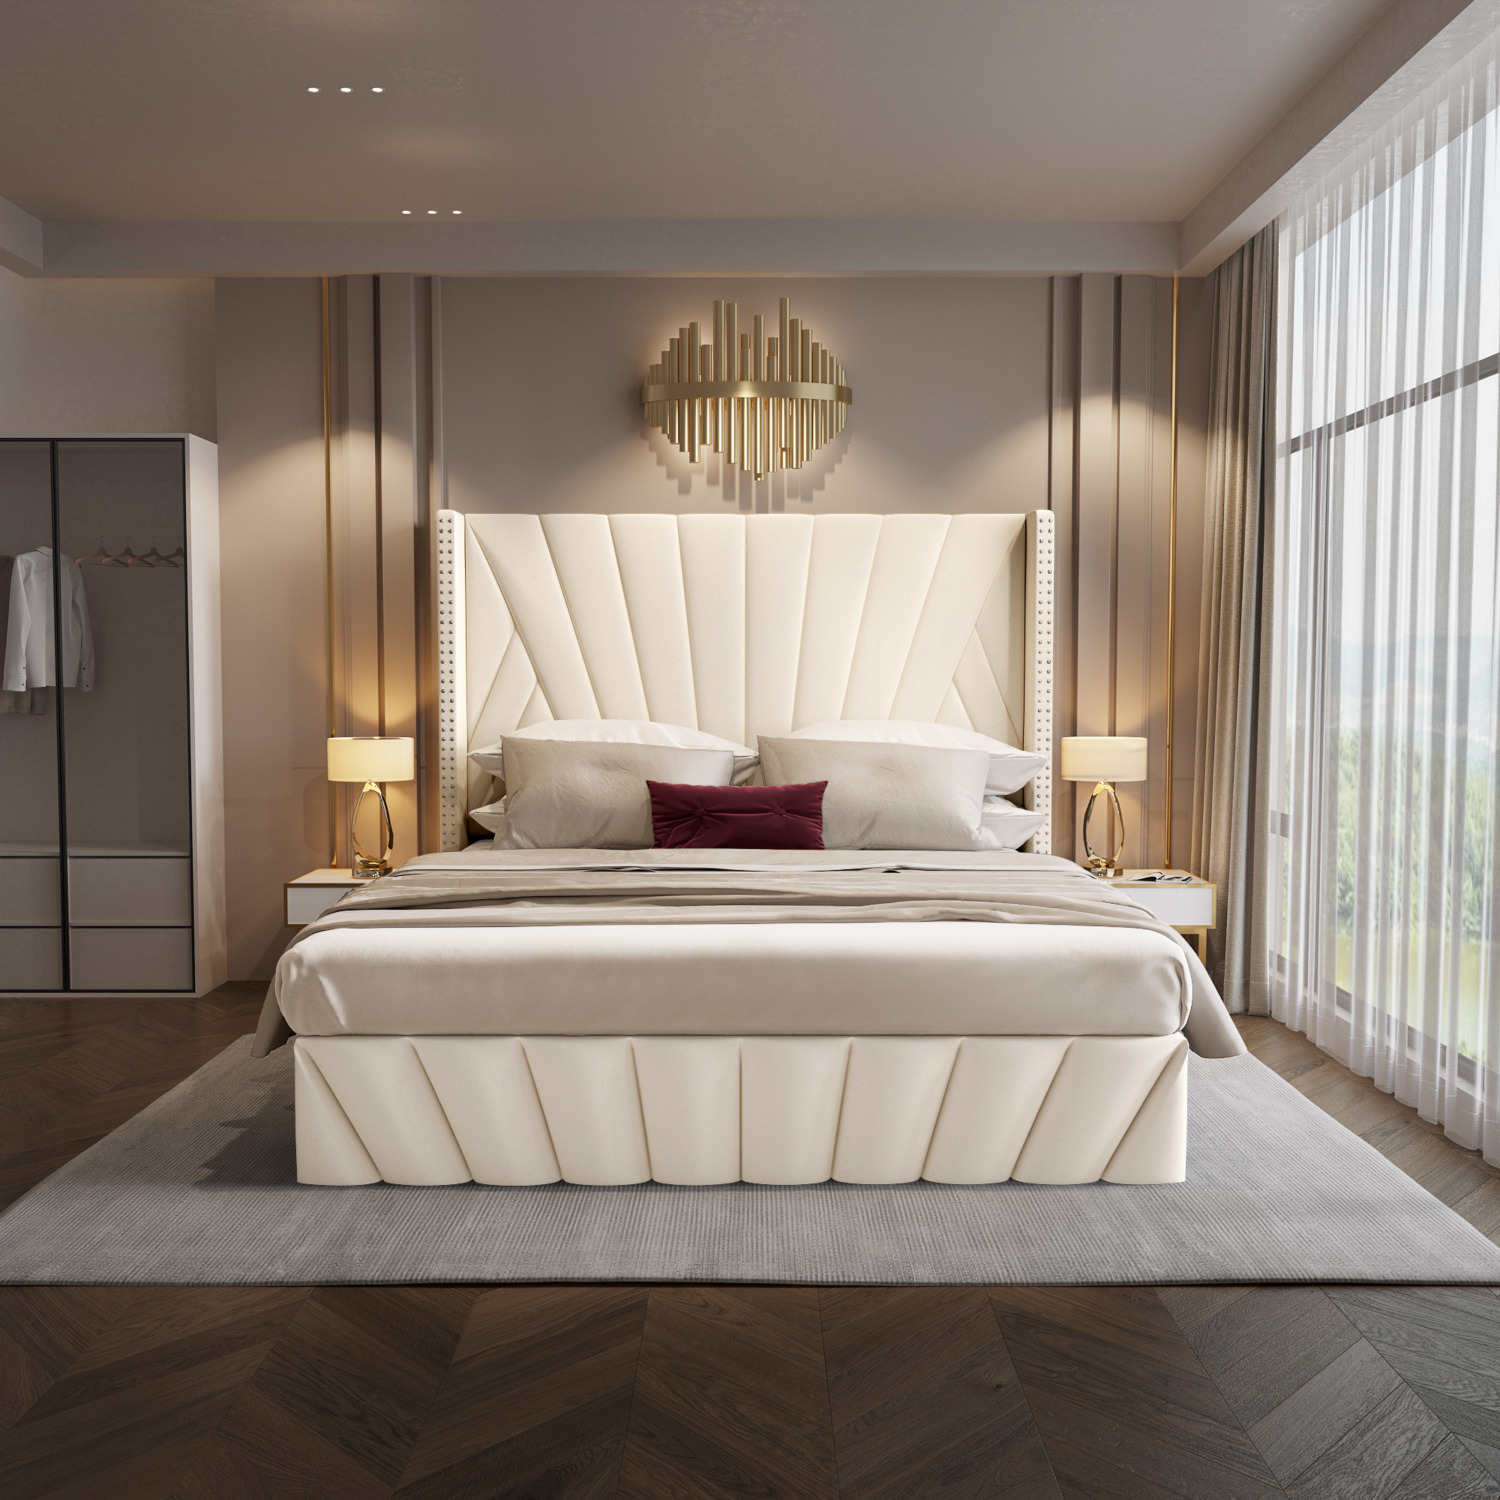 Aykah Size Velvet Upholstered Tufted Bed, Fabric, Low Profile Platform, Metal Bed Frame with High Headboard, Wood Slat Support, Modern Design, Mattress Size (Beige, King)